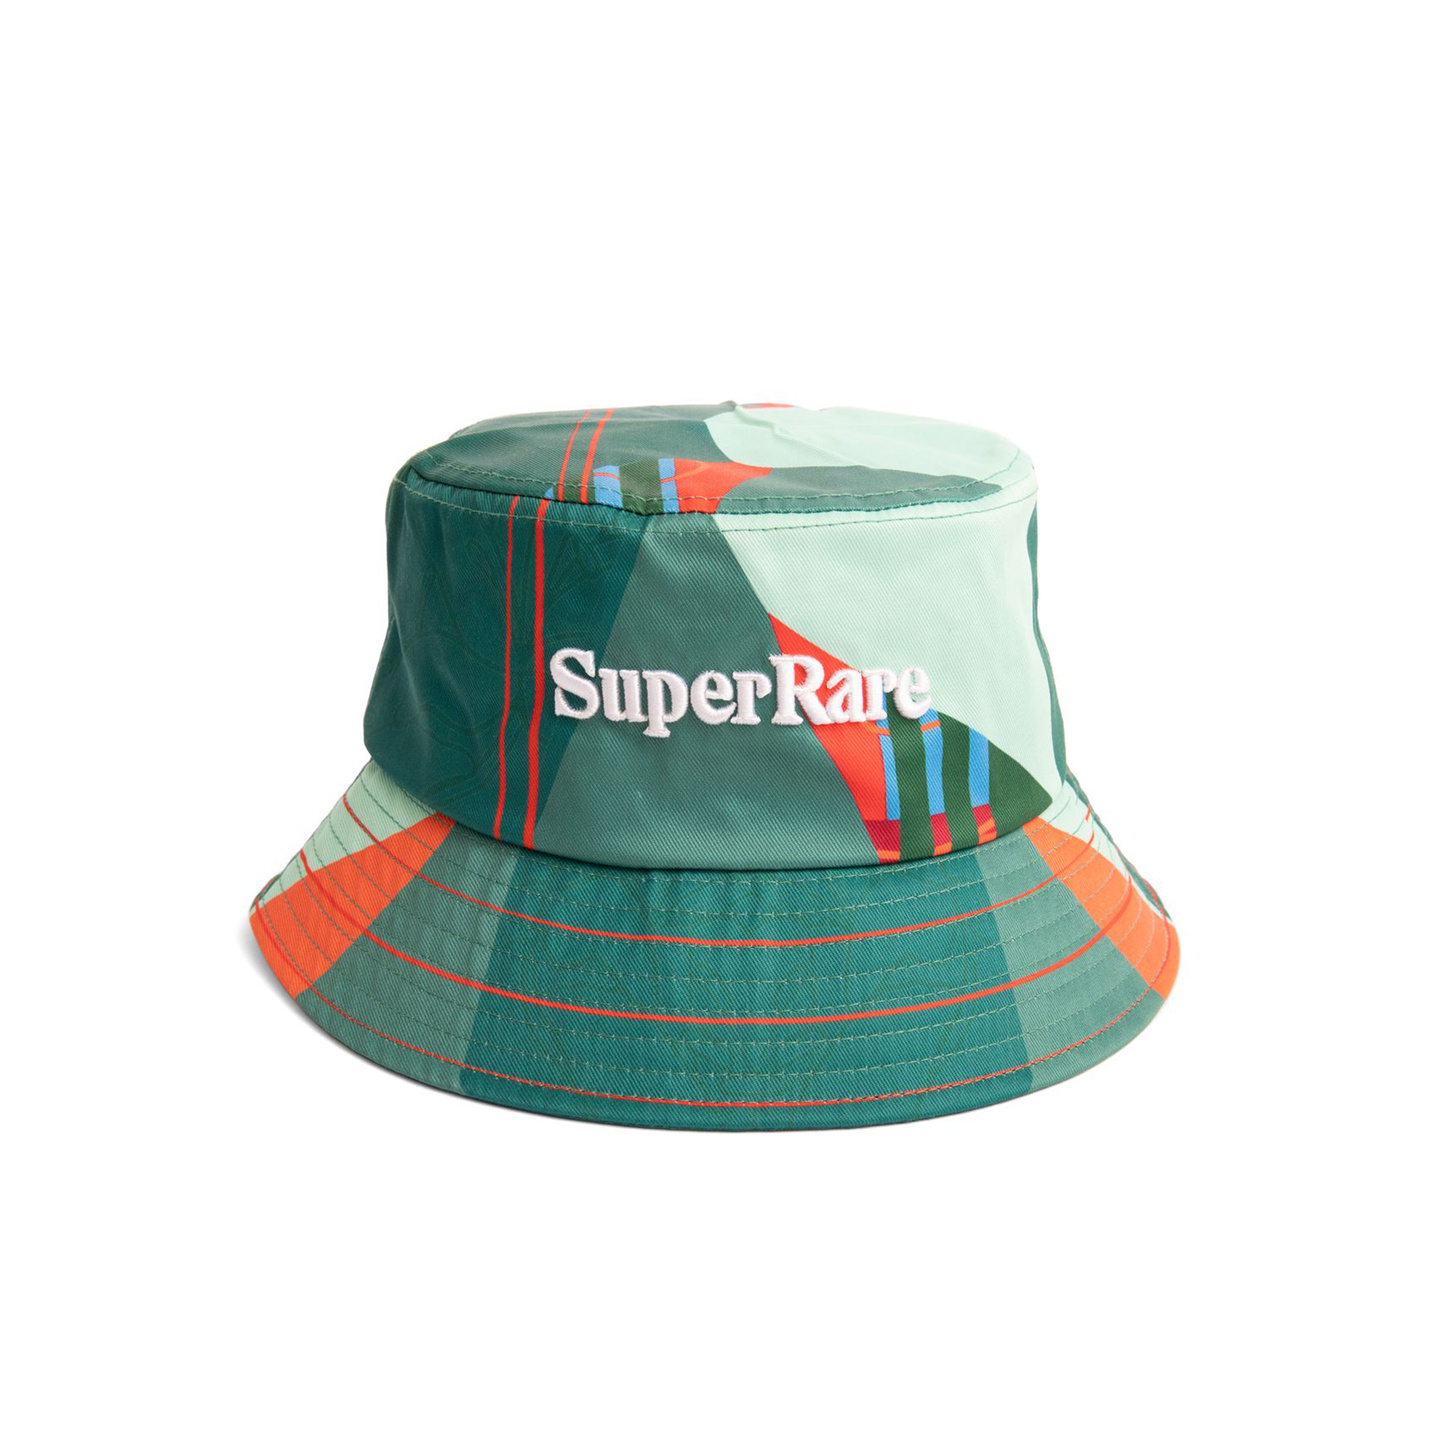 SuperRare x Izzakko Bucket Hat